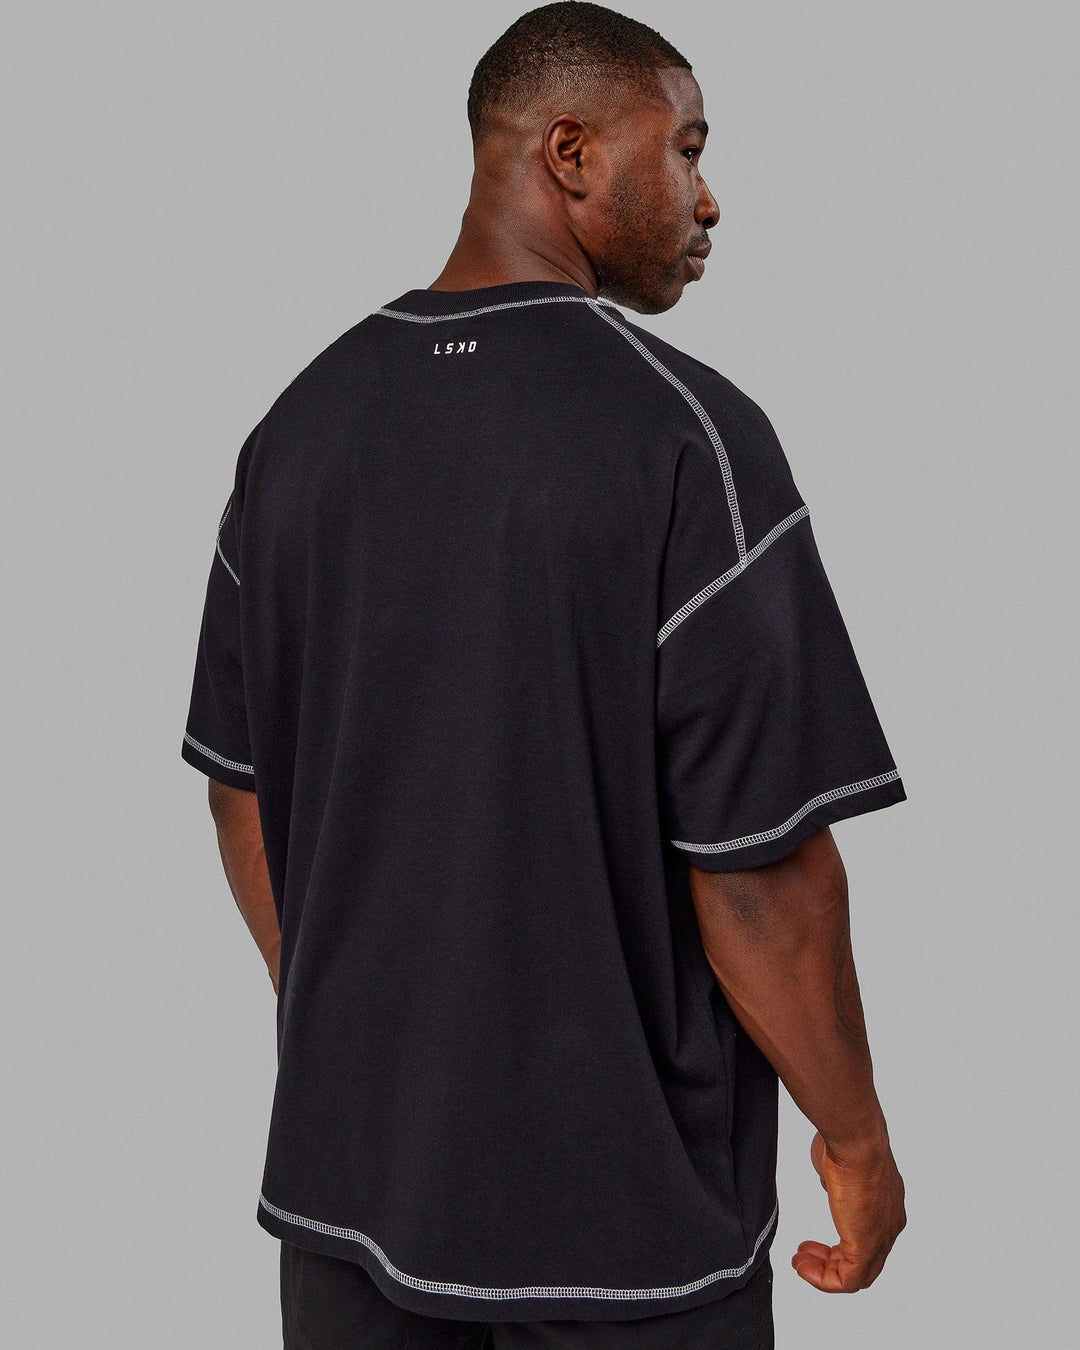 Man wearing Unisex Overlock Ultra-Heavyweight Tee Oversize - Black-White